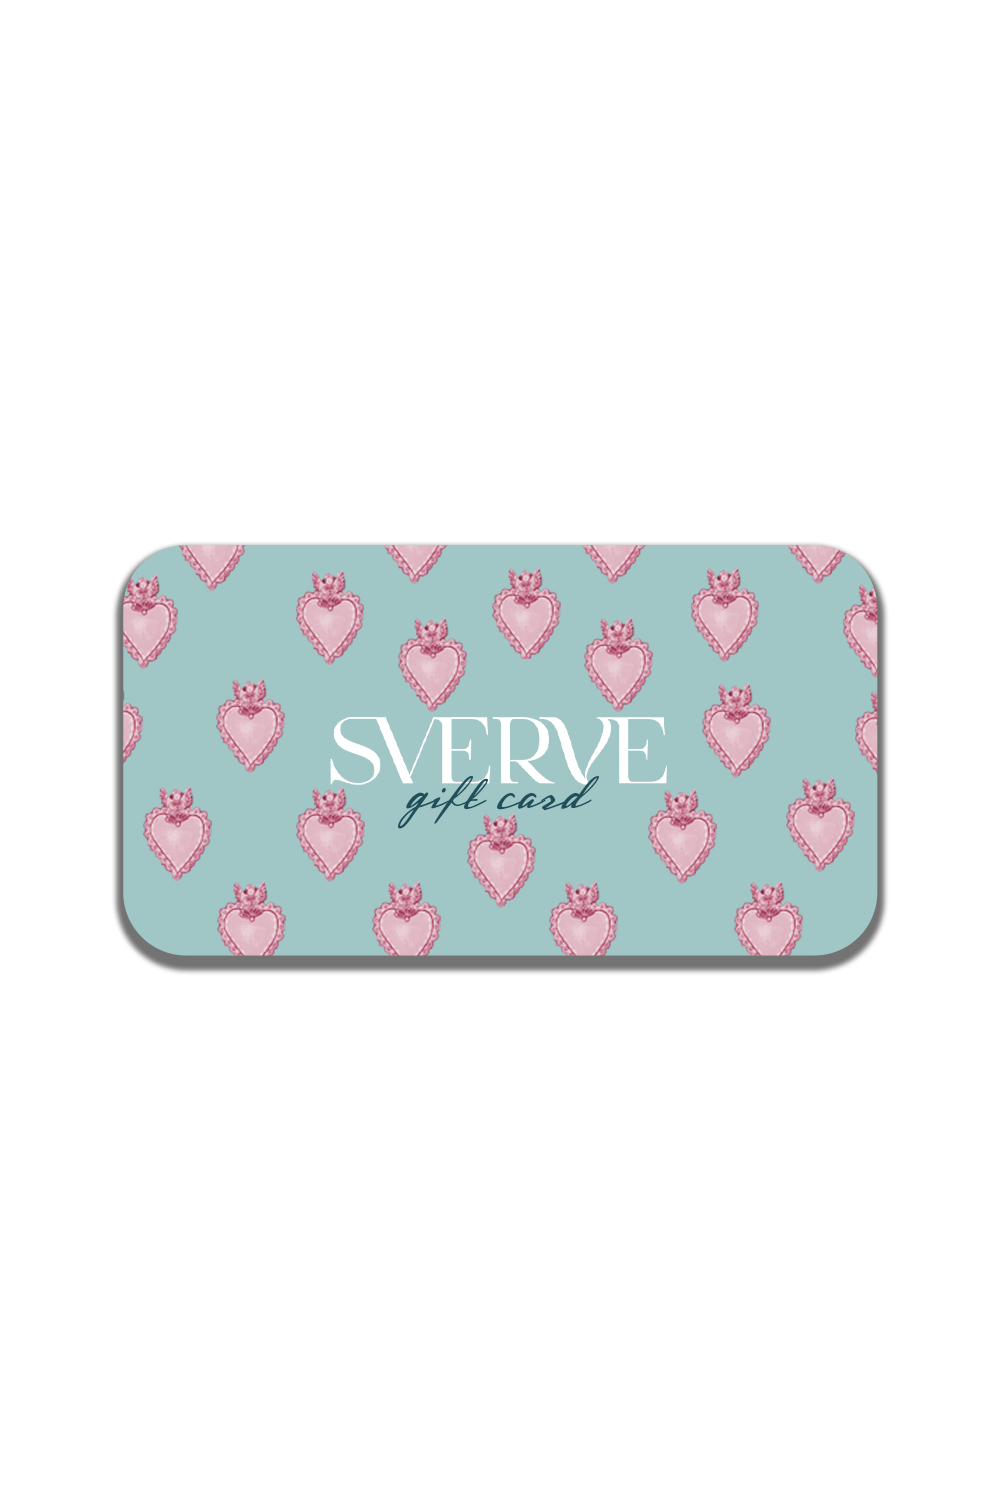 The Sverve Gift Card